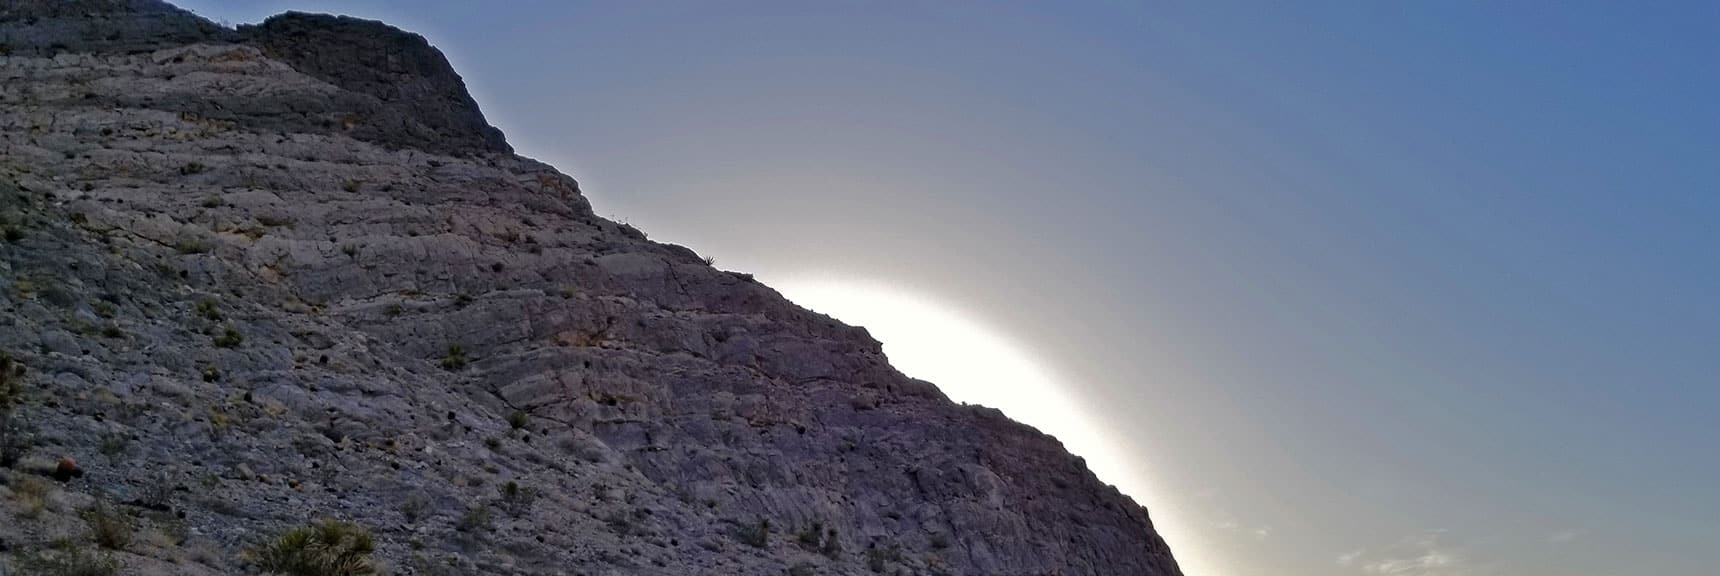 Southwestern Corner of Cheyenne Mt. Scoping Out Potential Summit Approaches | Cheyenne Mountain | Las Vegas, Nevada